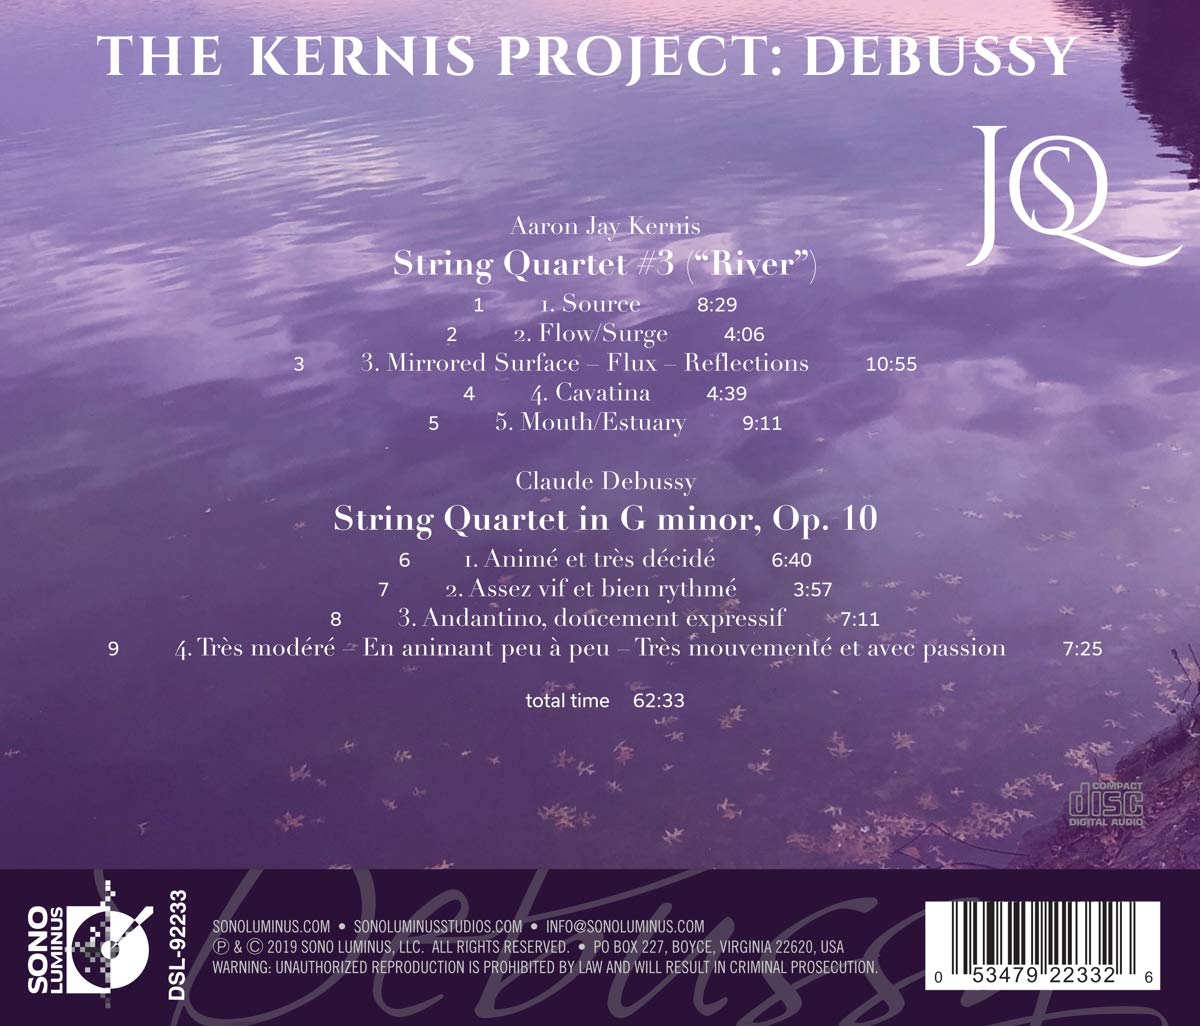 Jasper String Quartet 드뷔시 / 애런 제이 커니스: 현악 4중주 (The Kernis Project: Debussy)